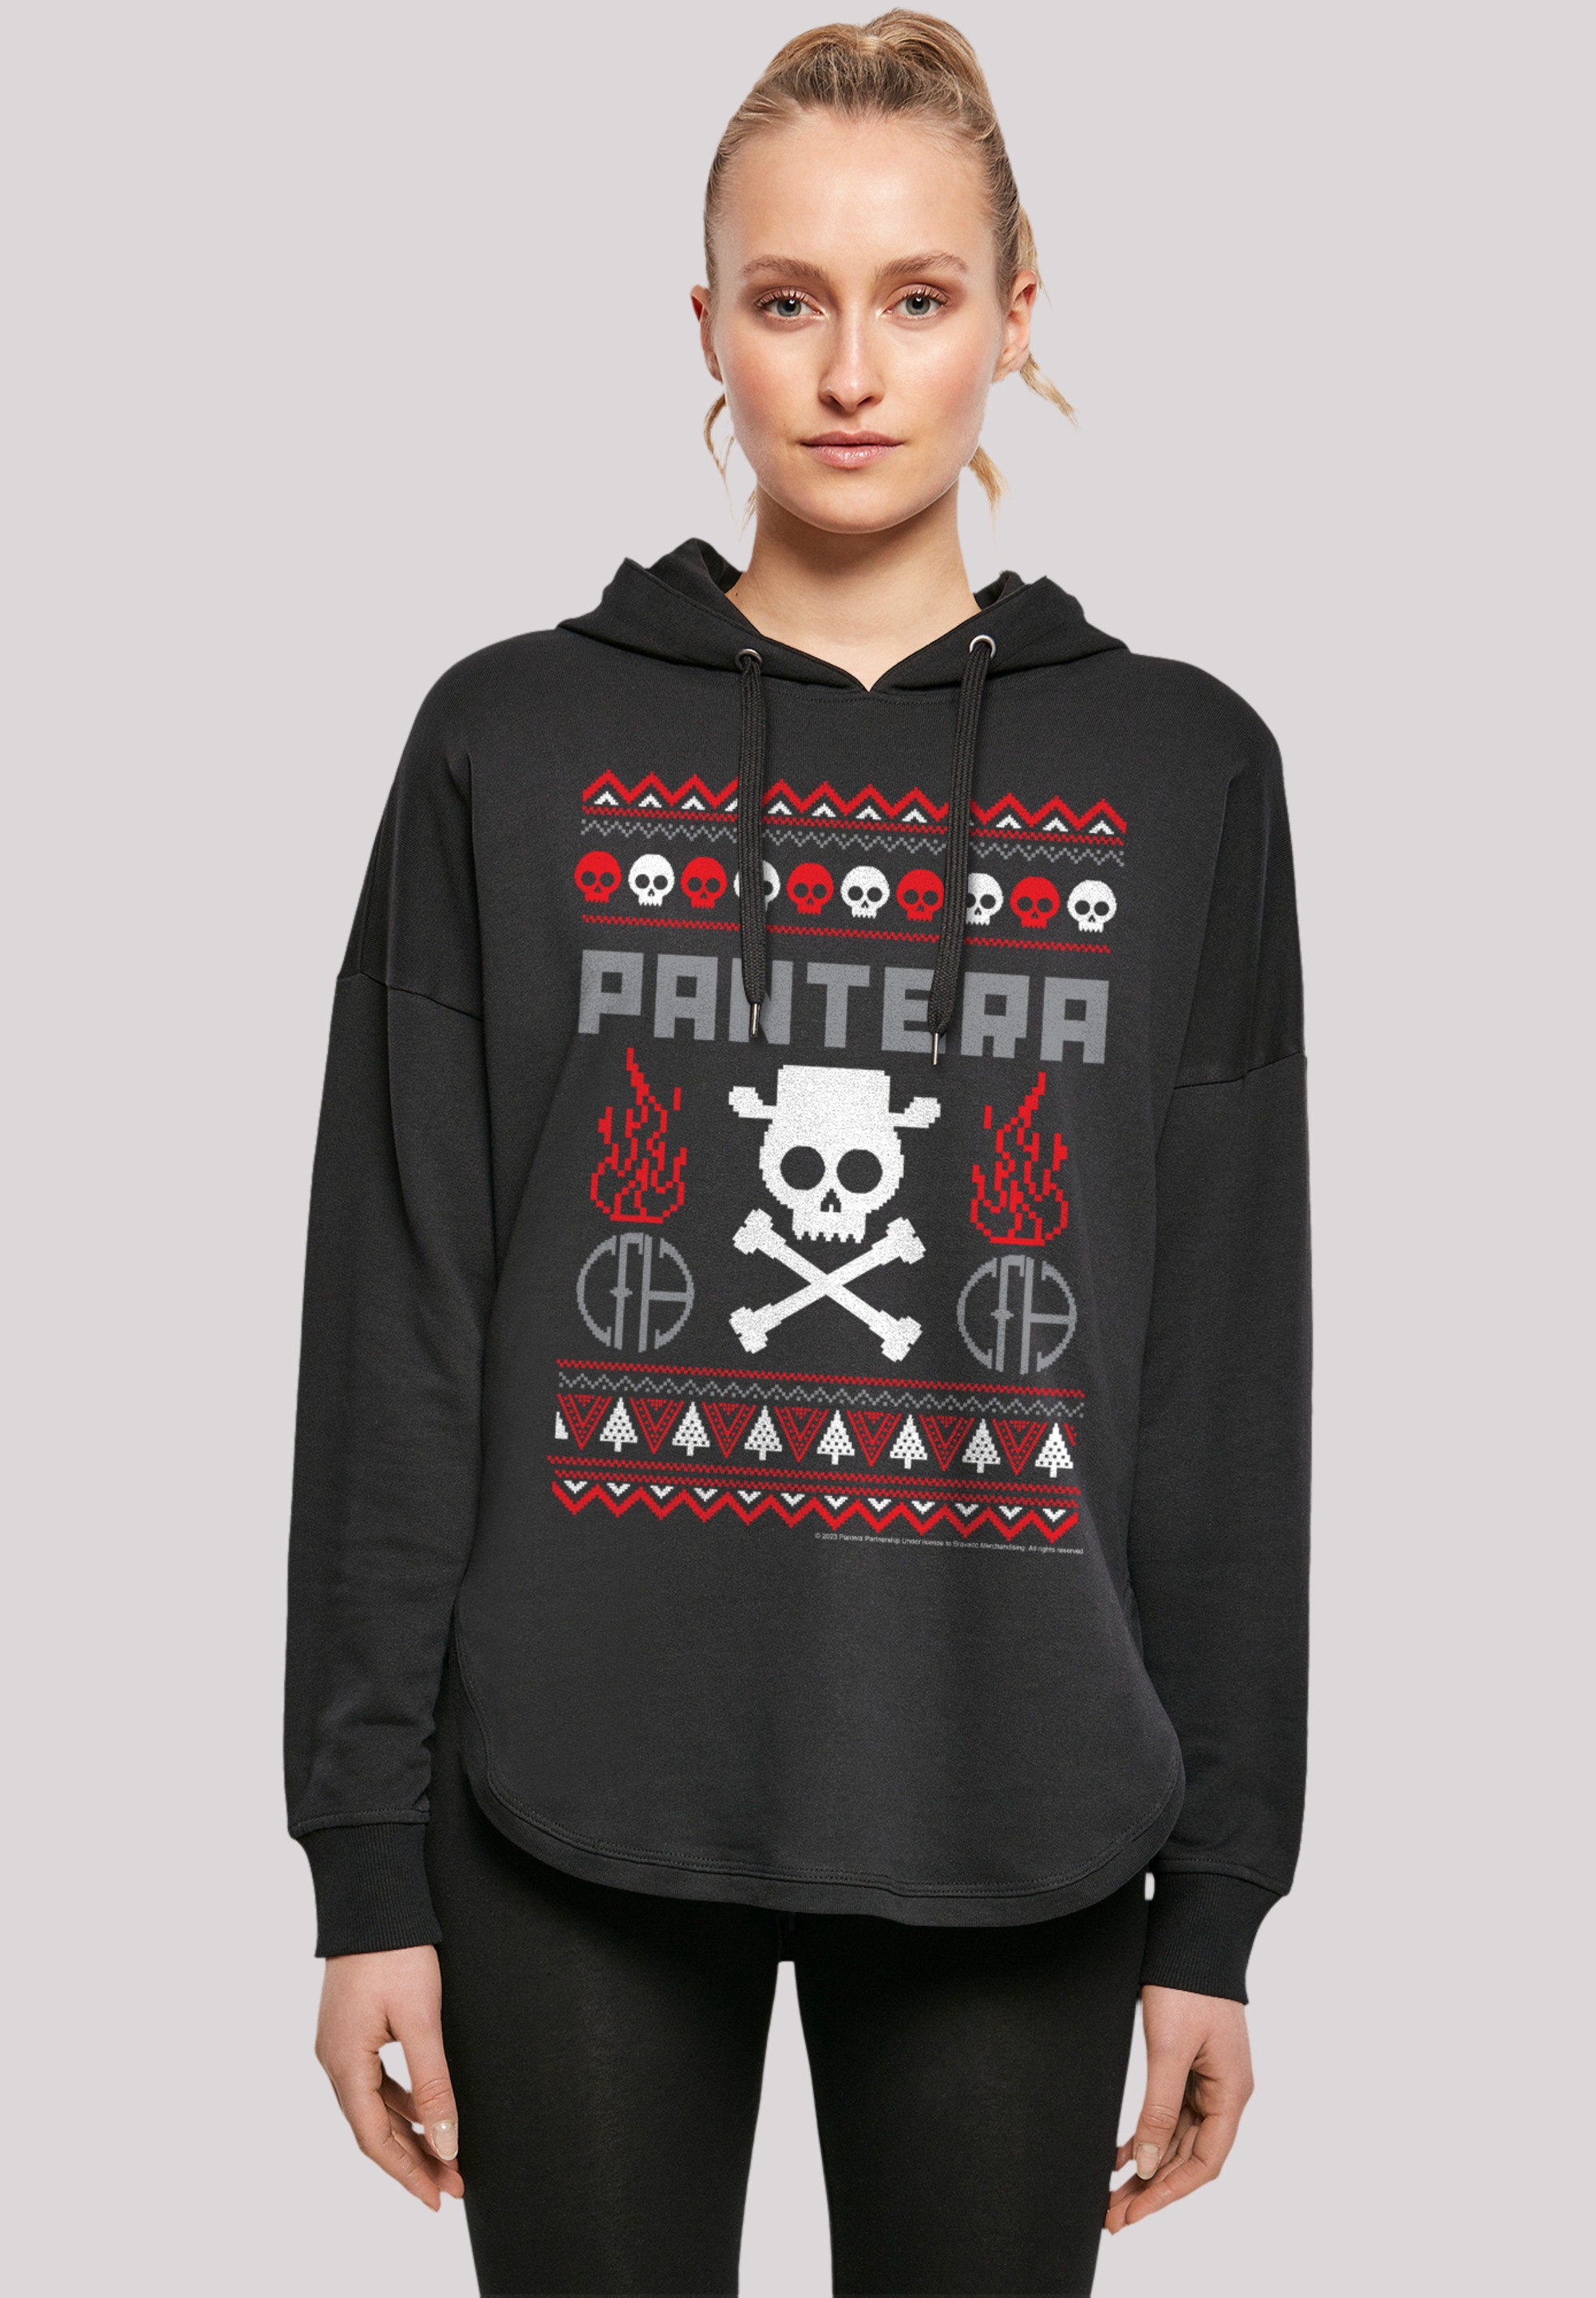 F4NT4STIC Sweatshirt online Weihnachten kaufen »Pantera | walking Christmas«, Musik, Logo Band, I\'m